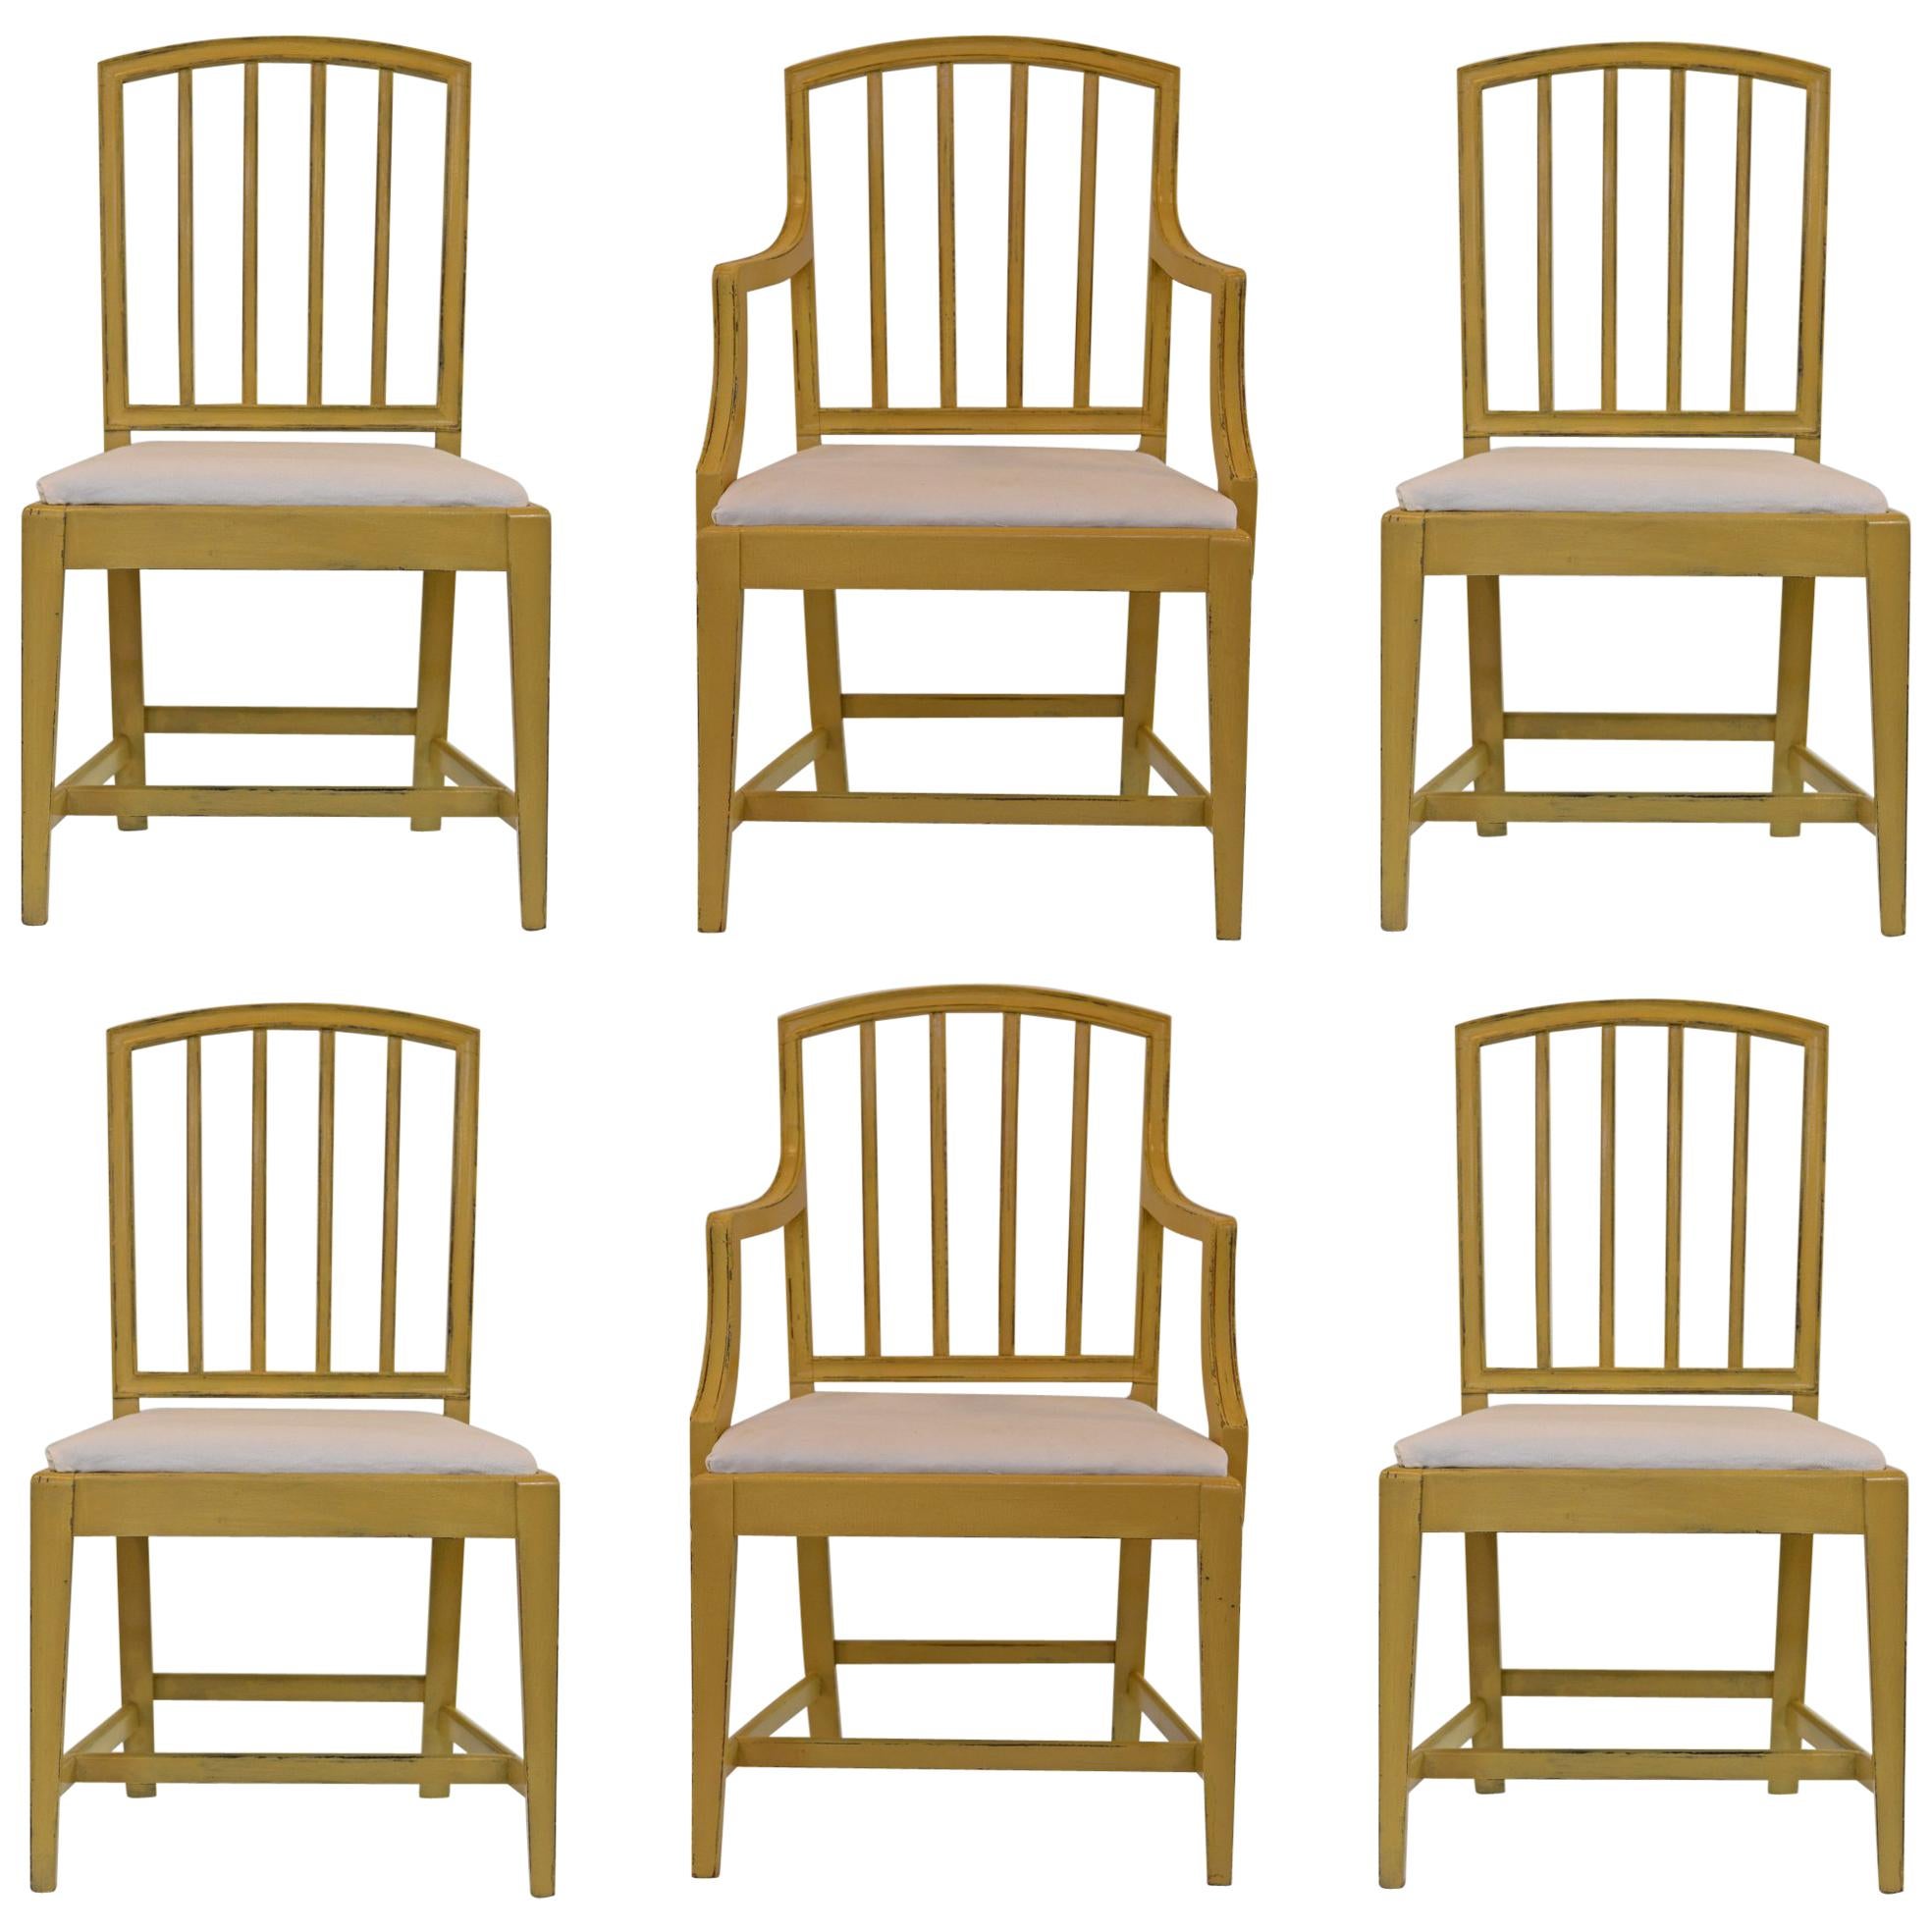 English Country House Hepplewhite Chairs in Churlish Green, Set of 6